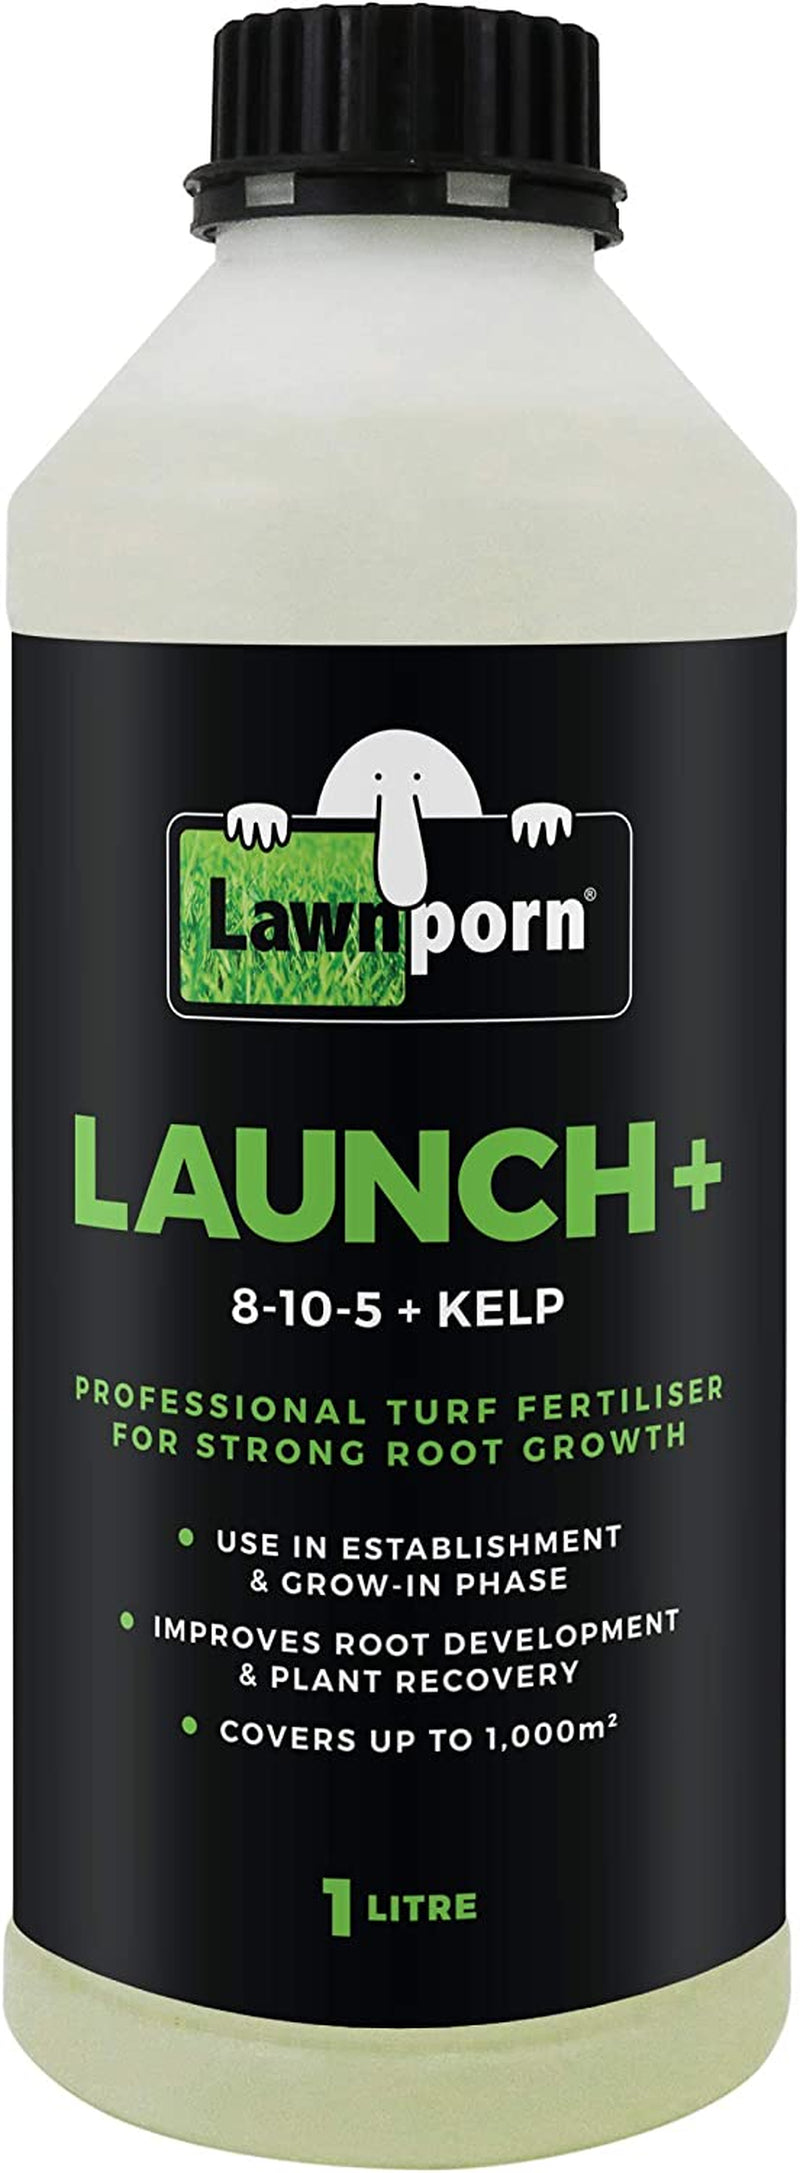 Lawnporn, Lawnporn Launch+ Turf Fertiliser